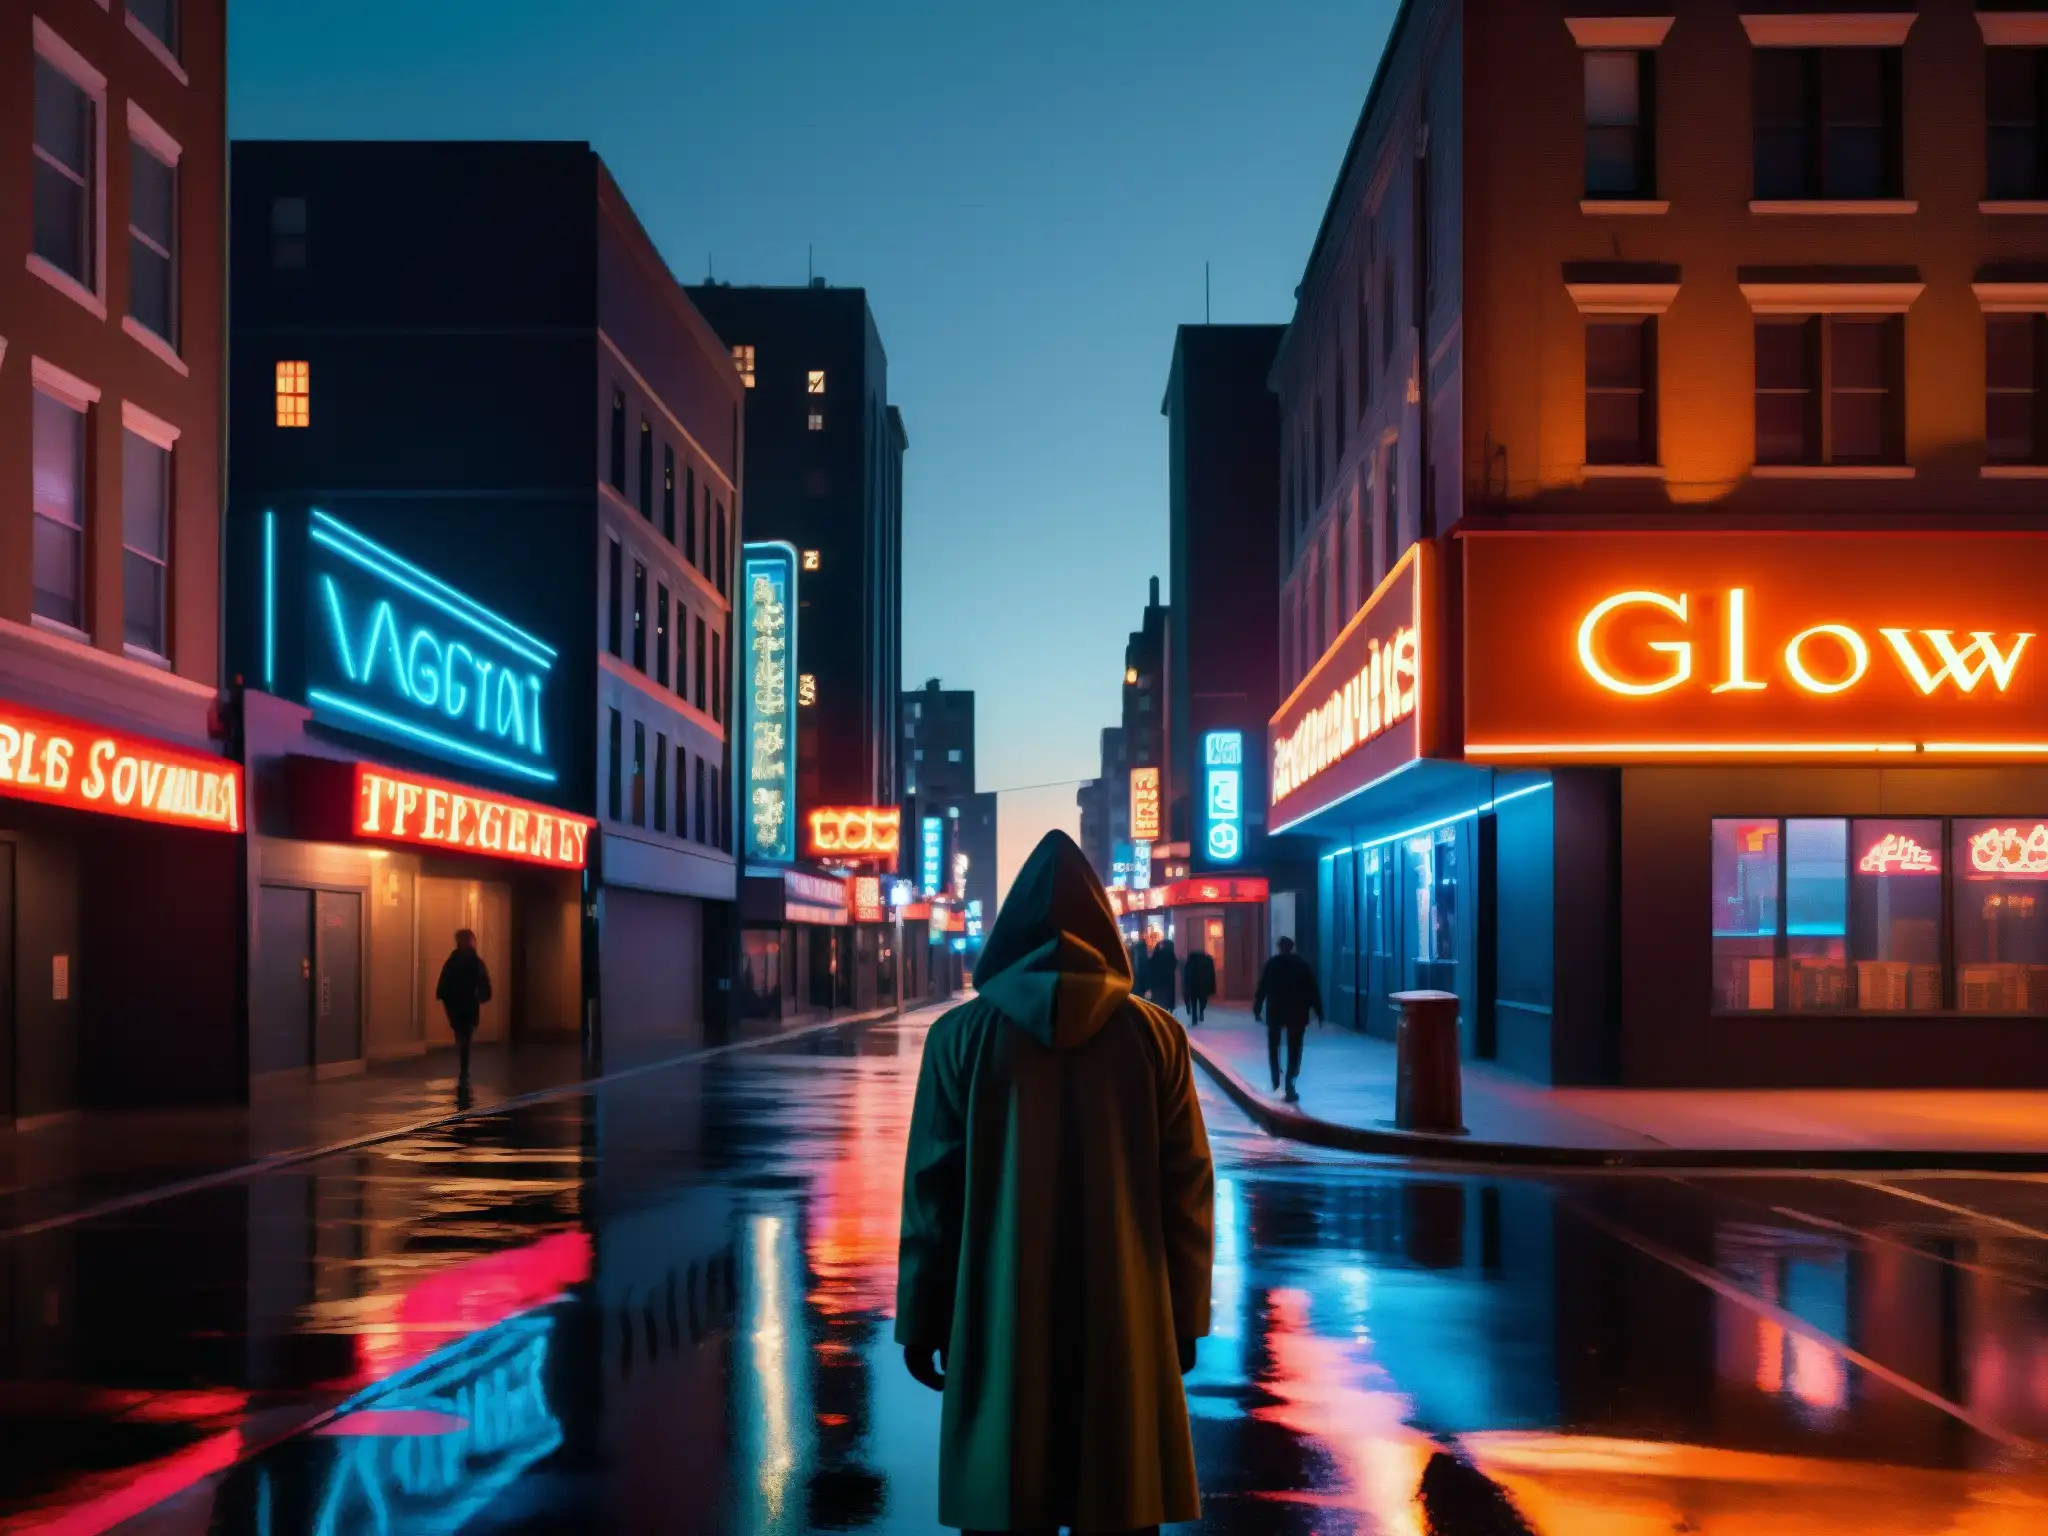 Figura misteriosa camina por calle nocturna, entre edificios altos y sombras, evocando fenómeno leyendas urbanas digitales